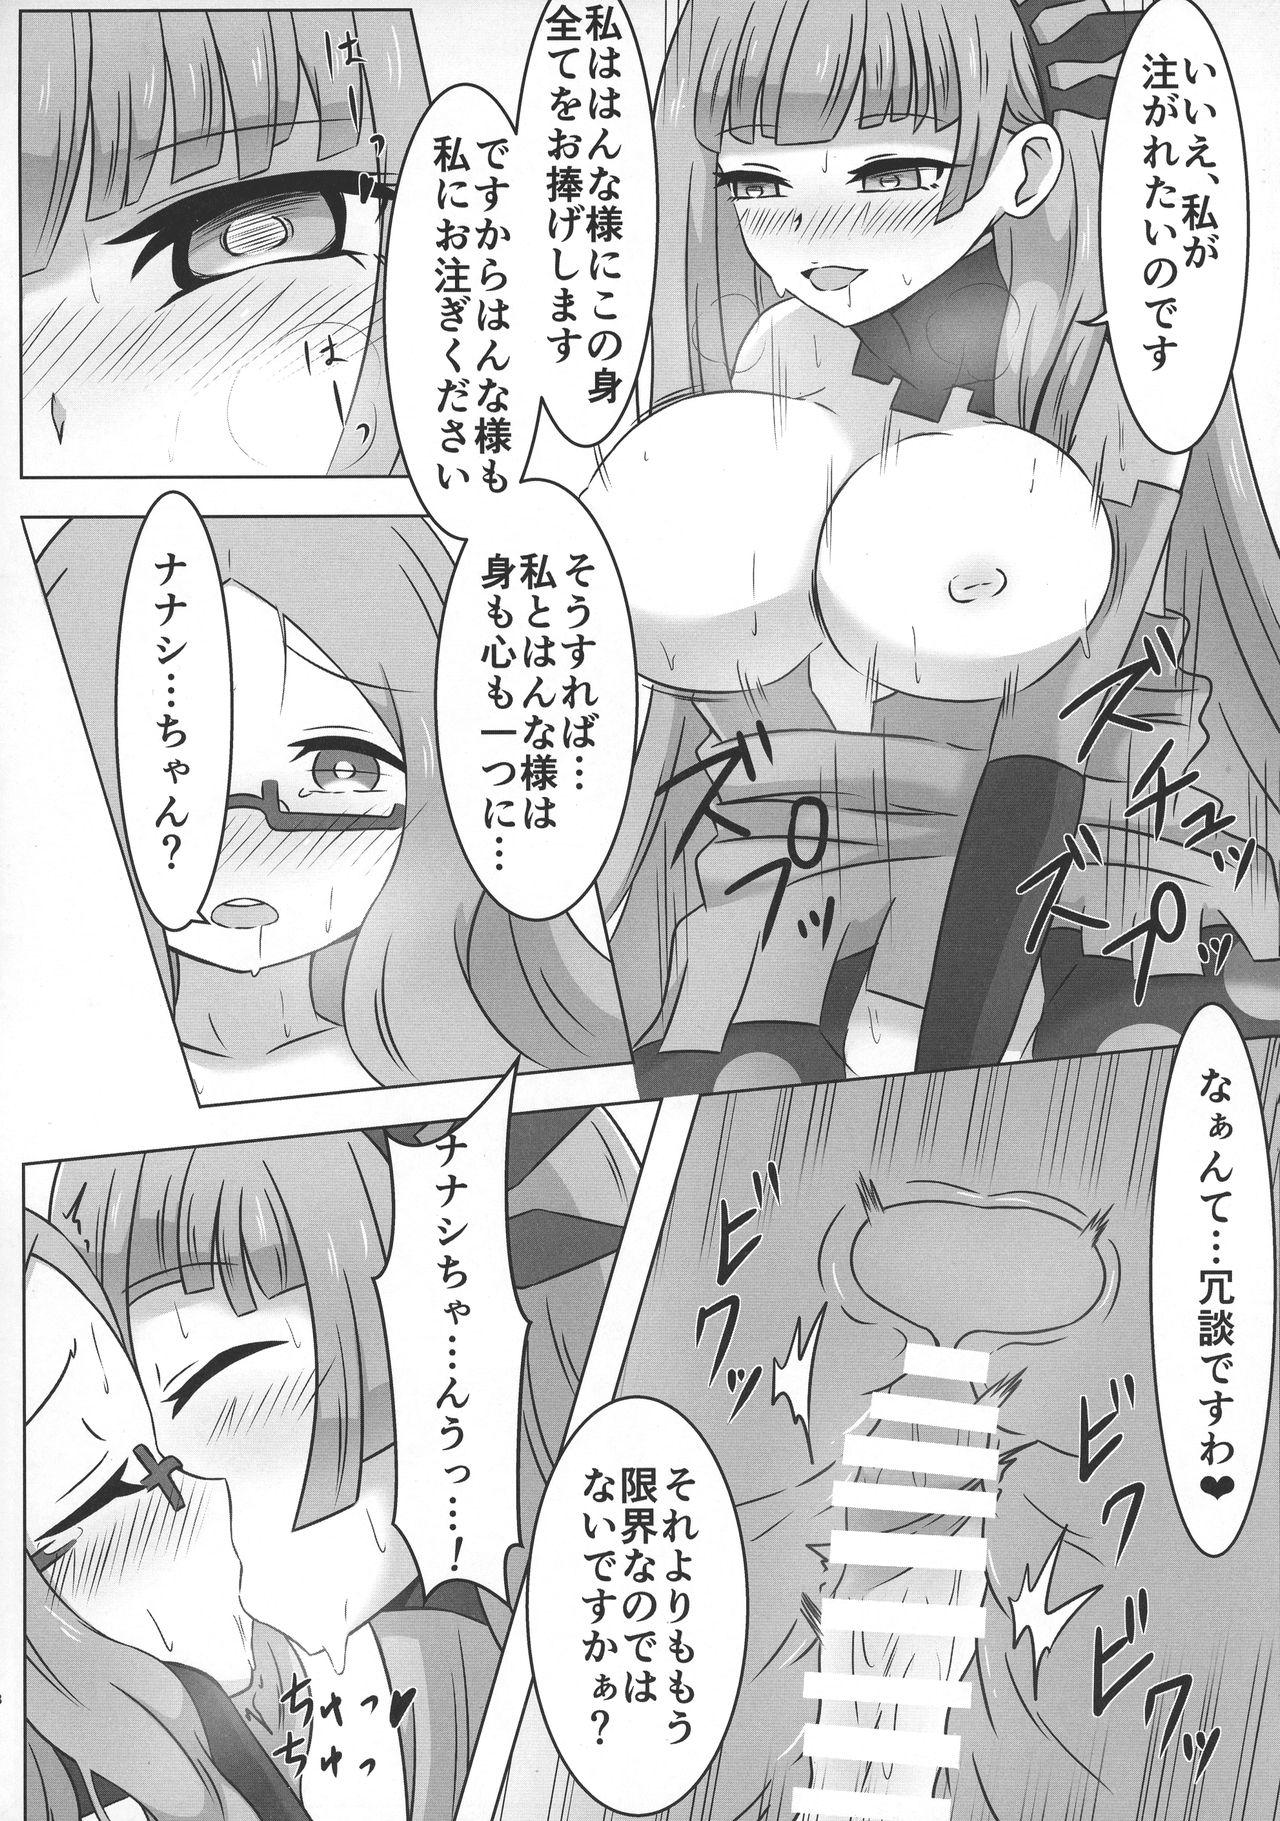 Bj LRIG Kenkyuu Nisshi 2017 Harugou - Selector infected wixoss Adolescente - Page 8